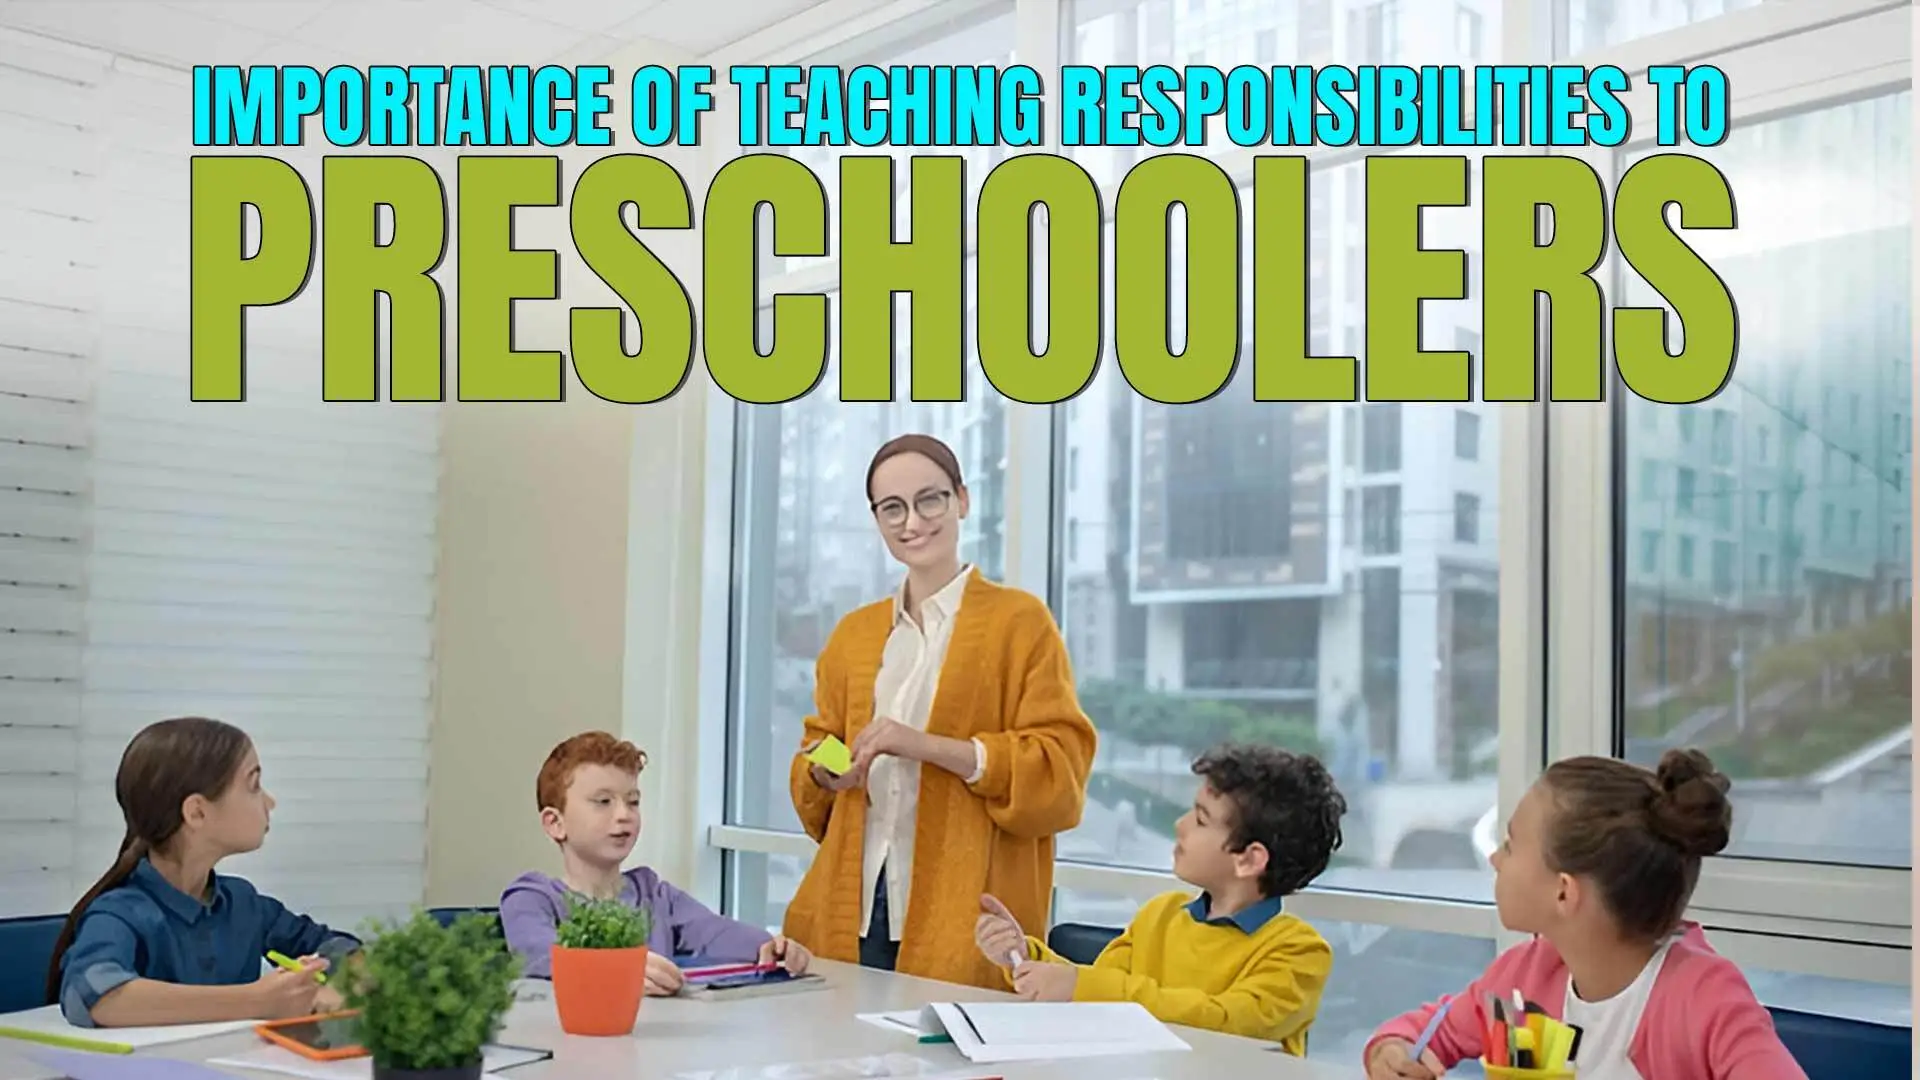 Teaching Responsibilities